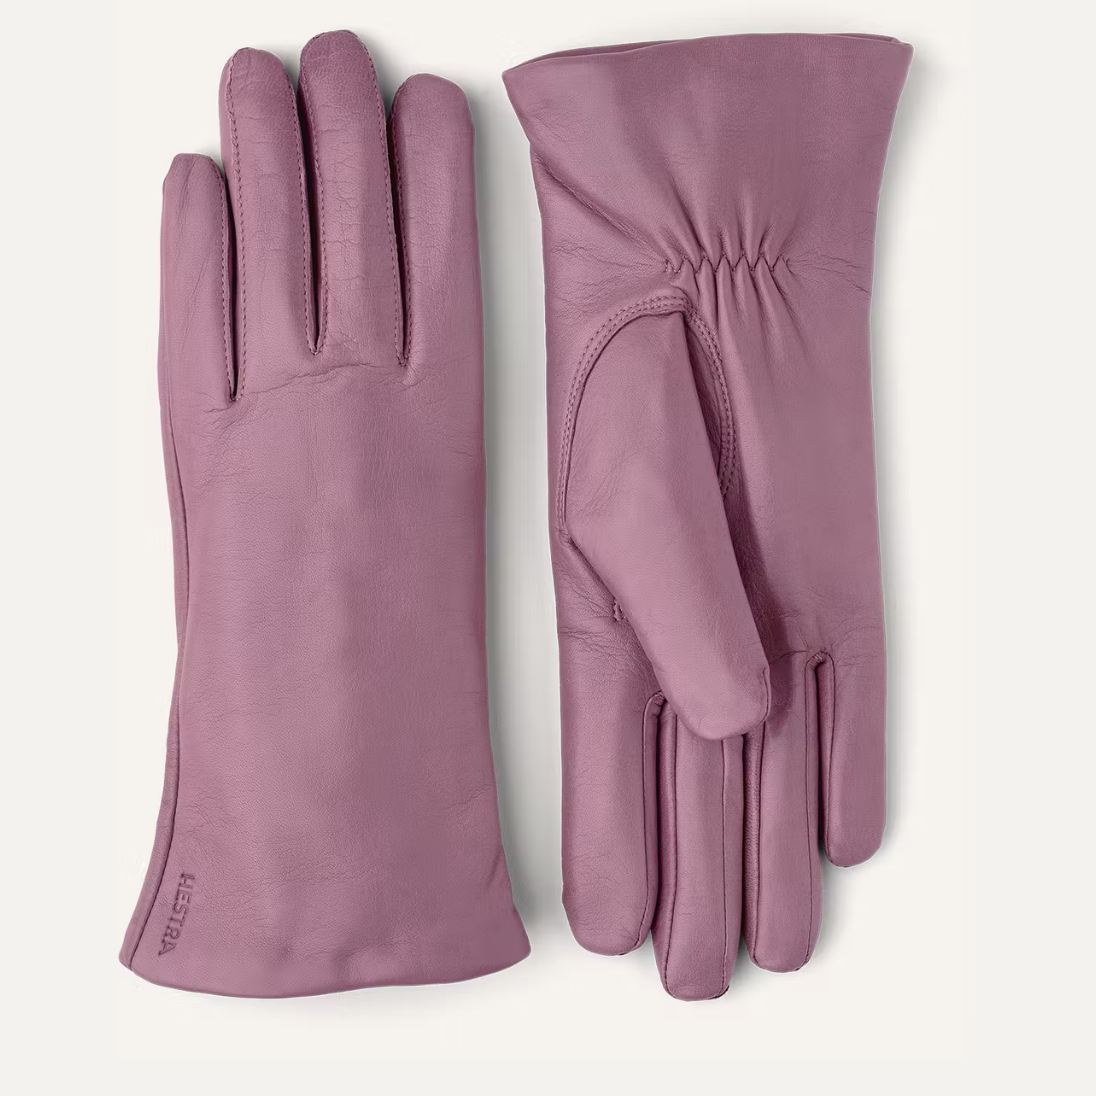 Details about   Womens Warm Thick Winter Mittens Knit Design Fleece Cuffs Fashion Gloves Sequins 